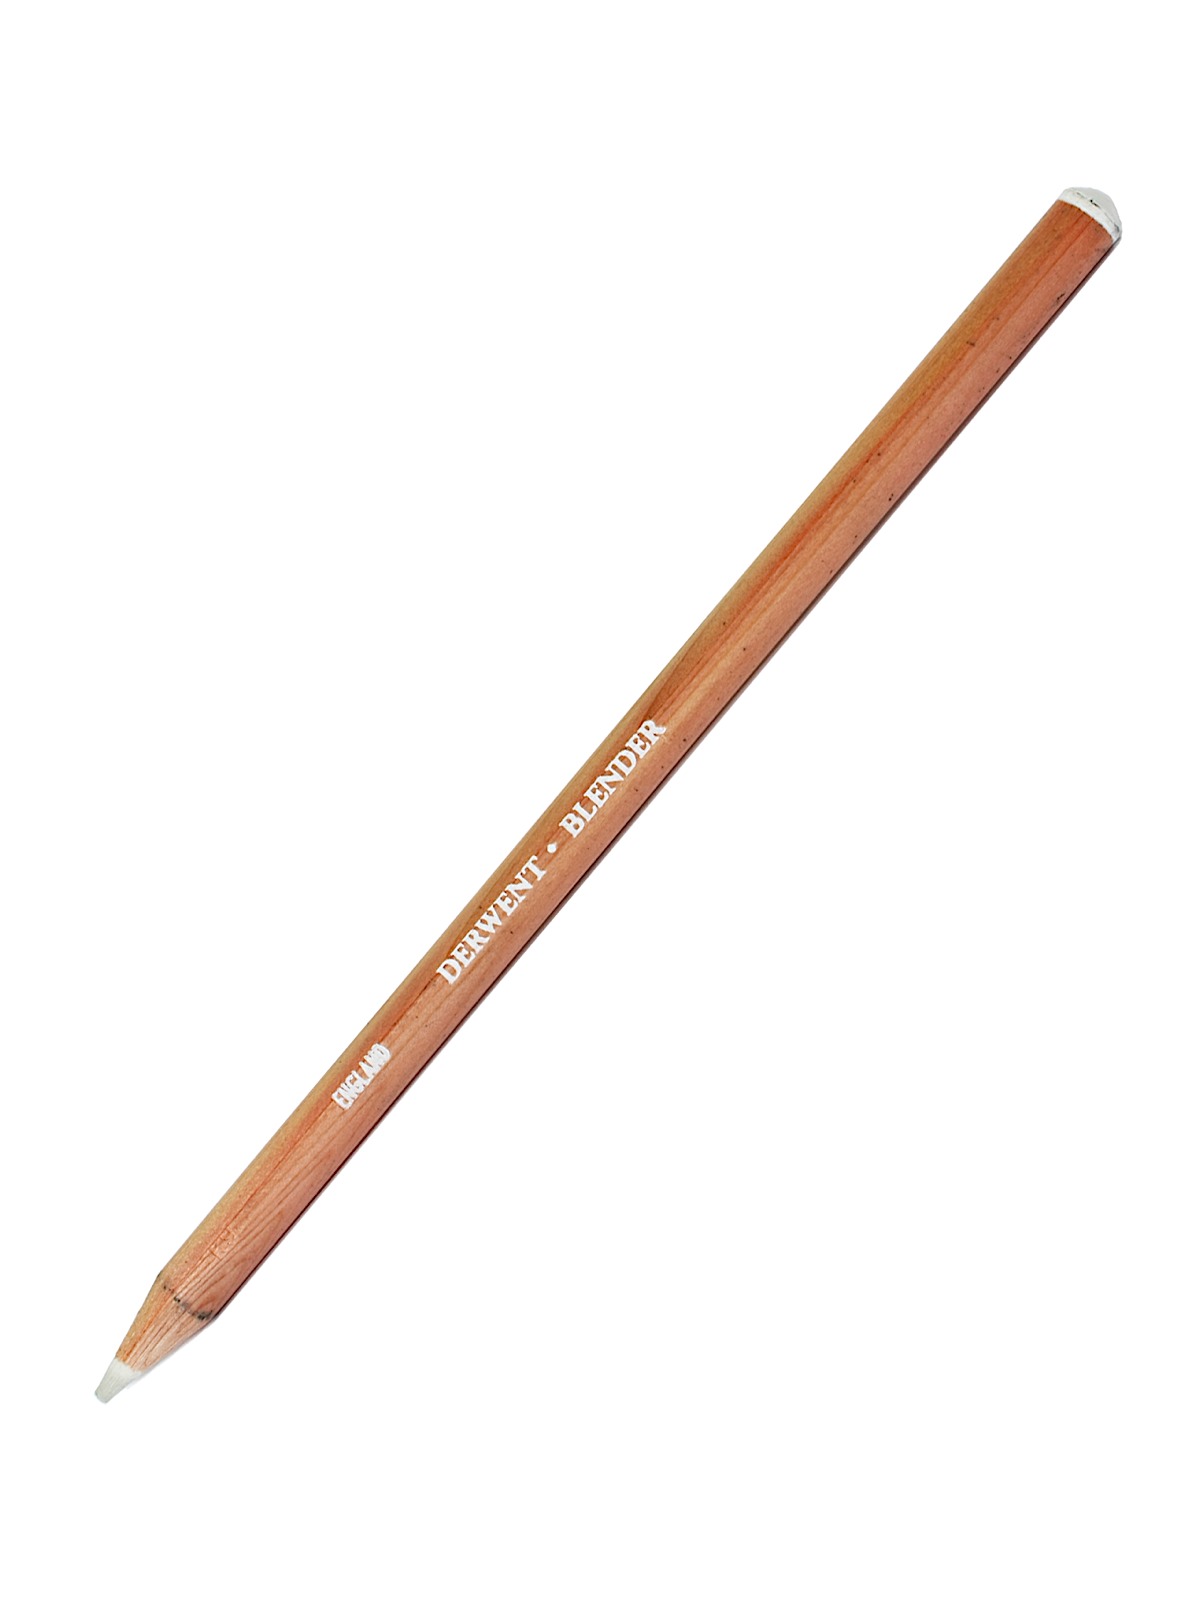 Blender Pencil Each